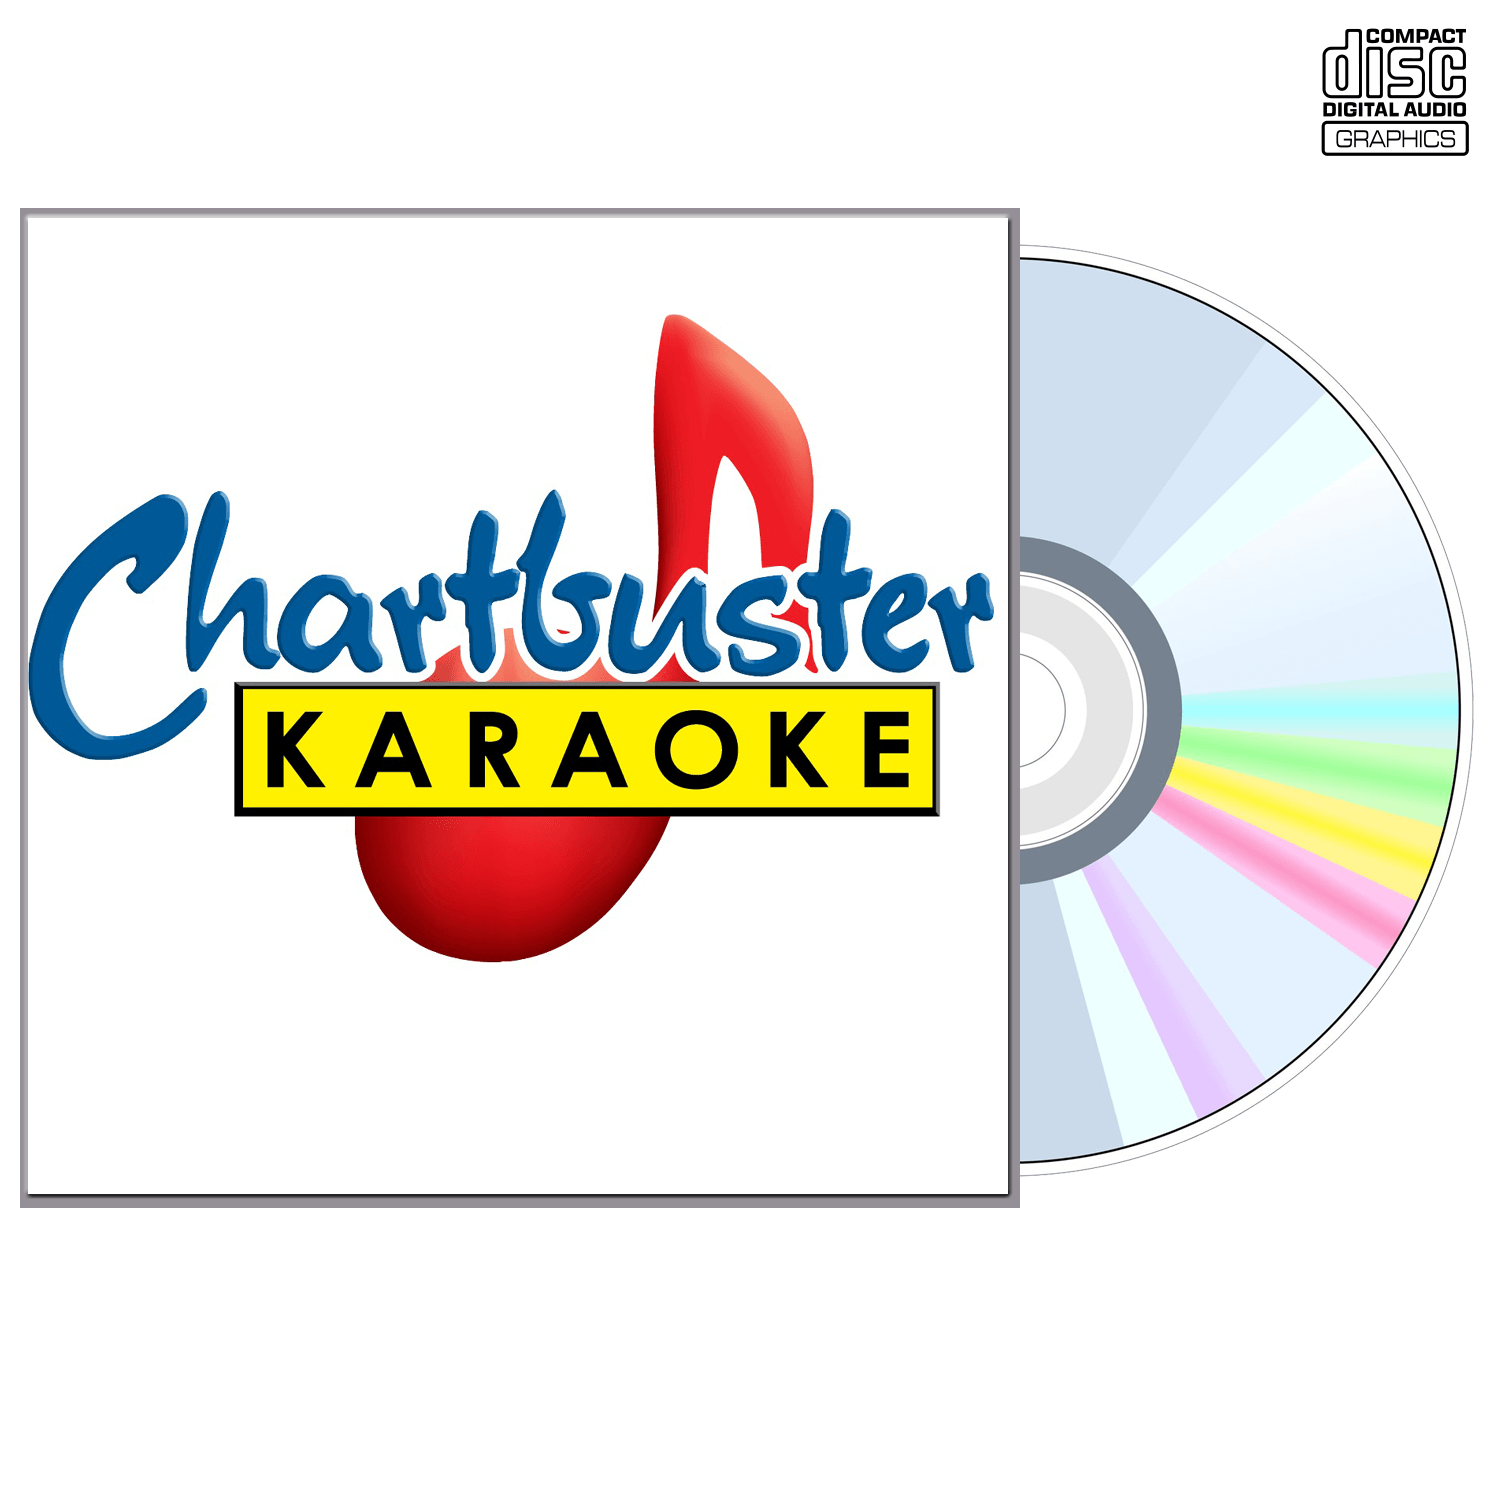 Foo Fighters Vol 2 - CD+G - Chartbuster Karaoke - Karaoke Home Entertainment